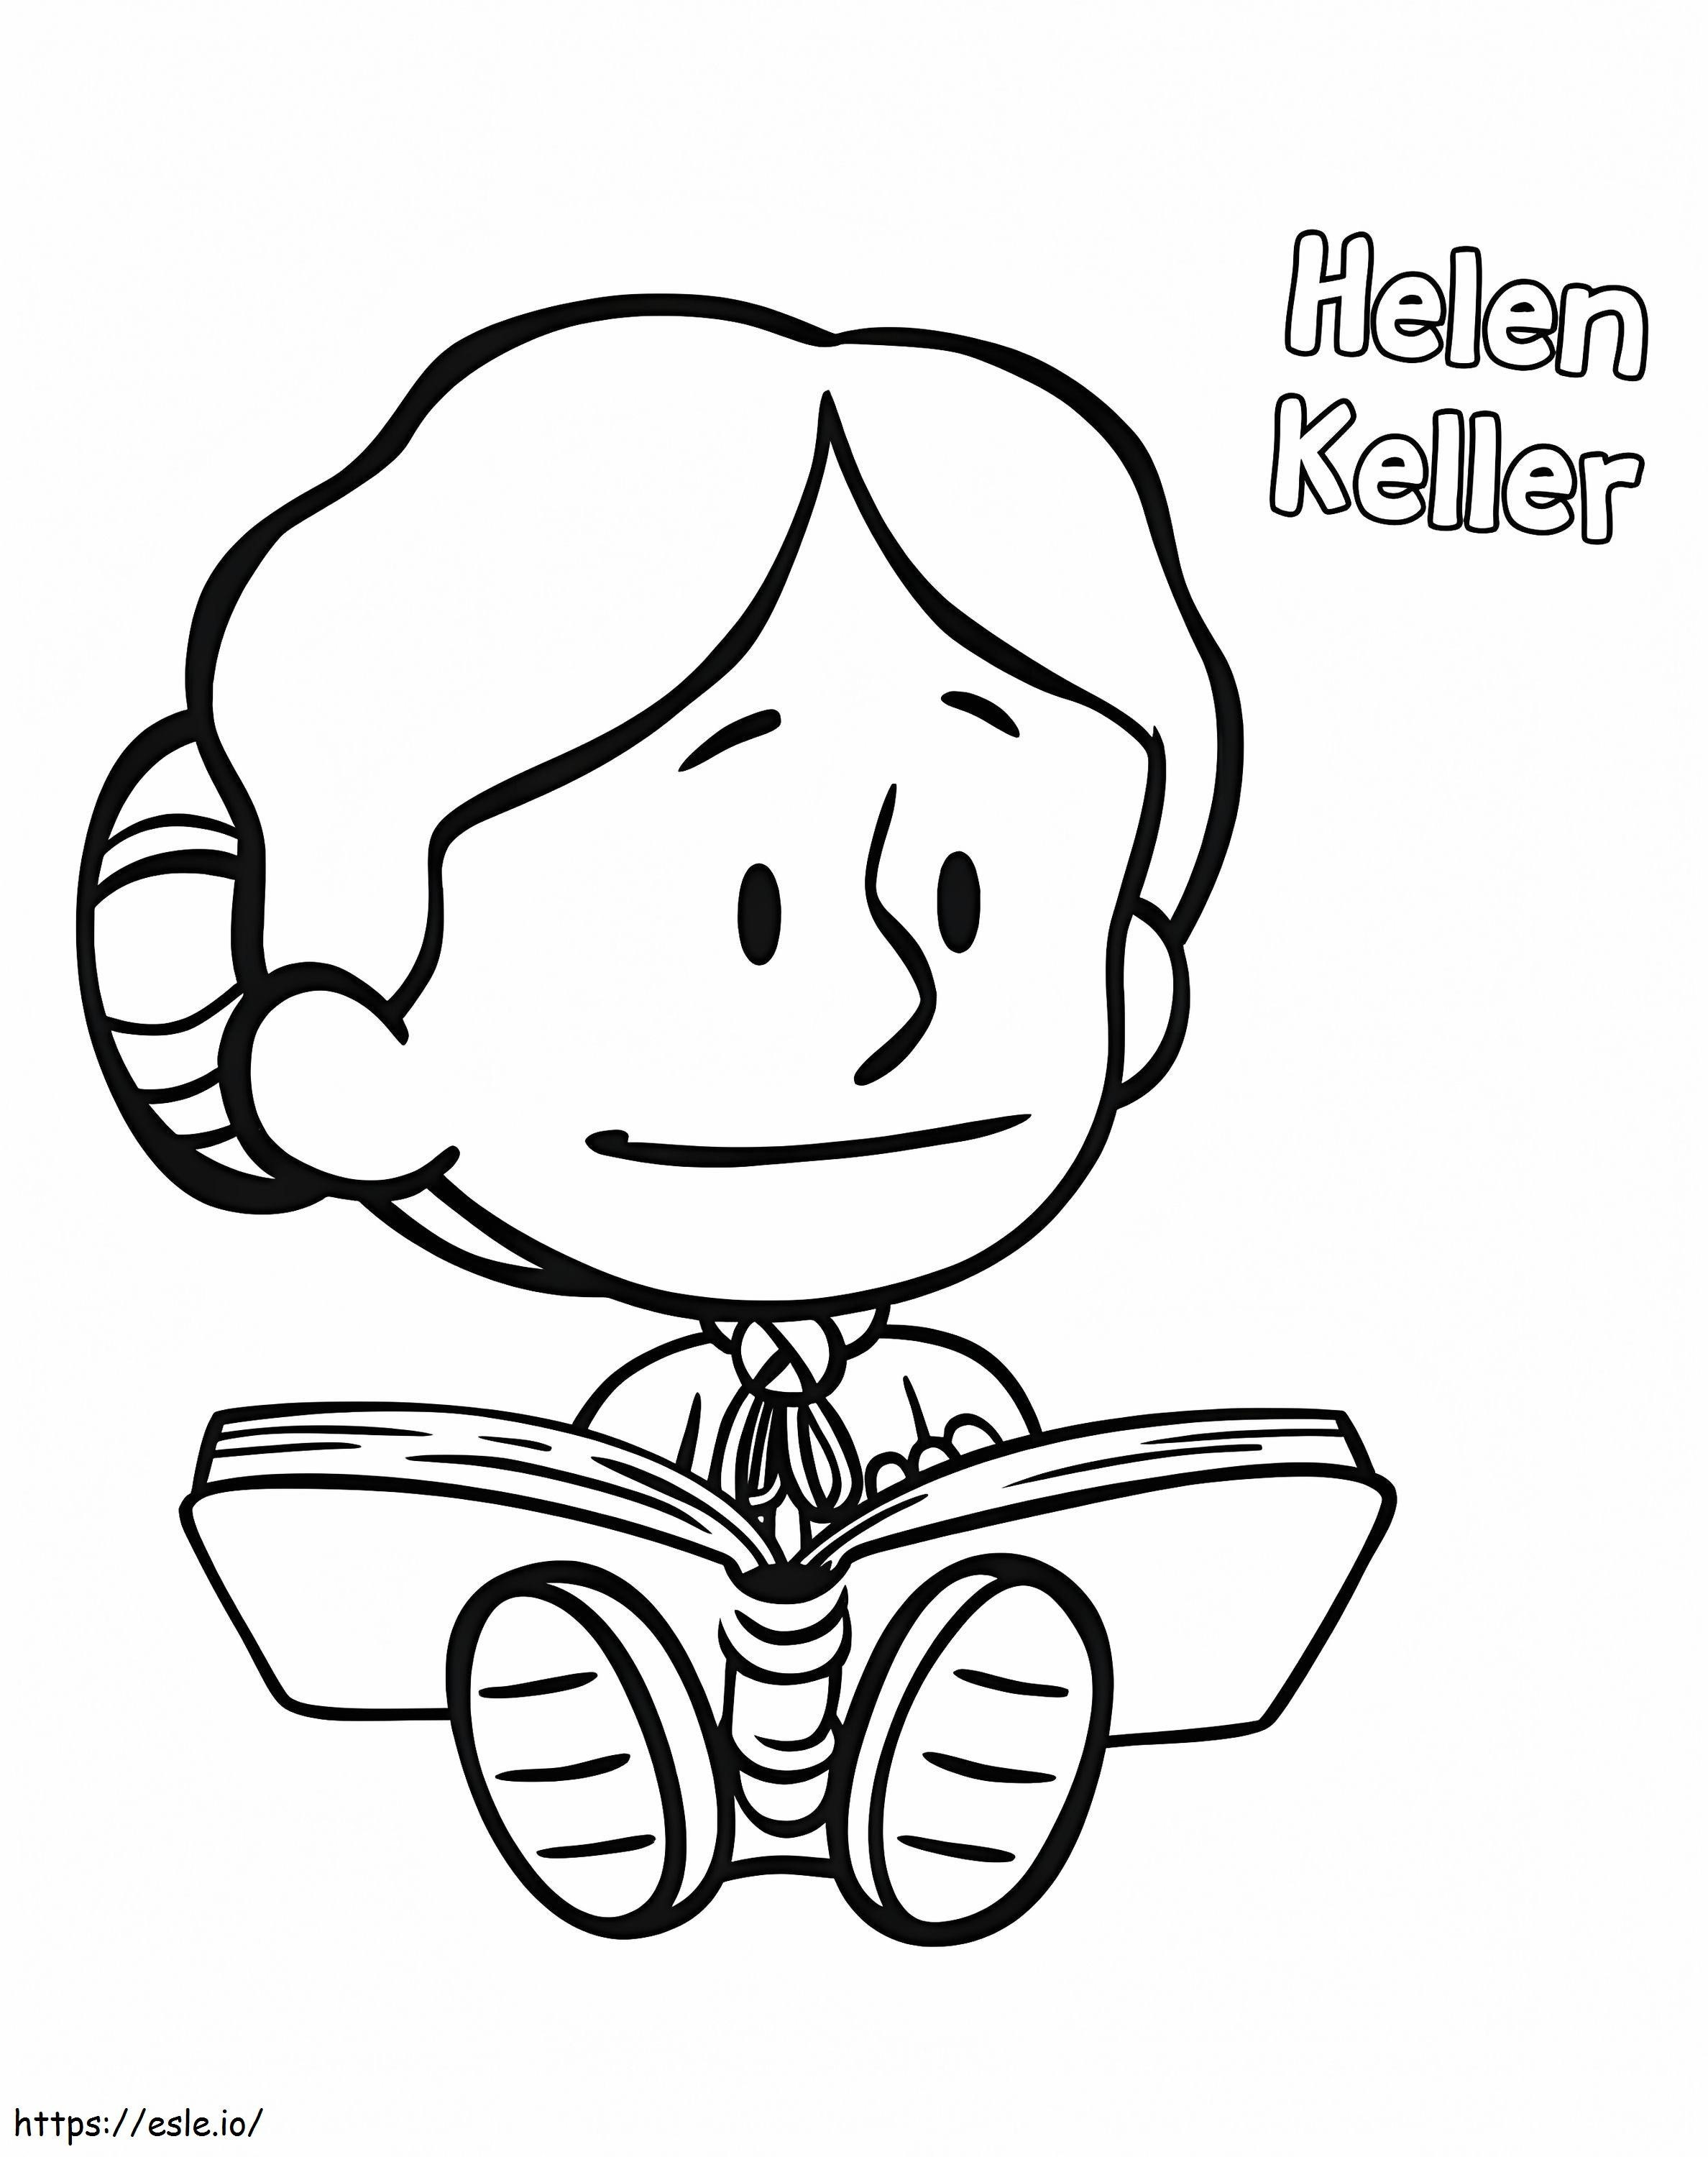 Coloriage Chibi Helen Keller à imprimer dessin